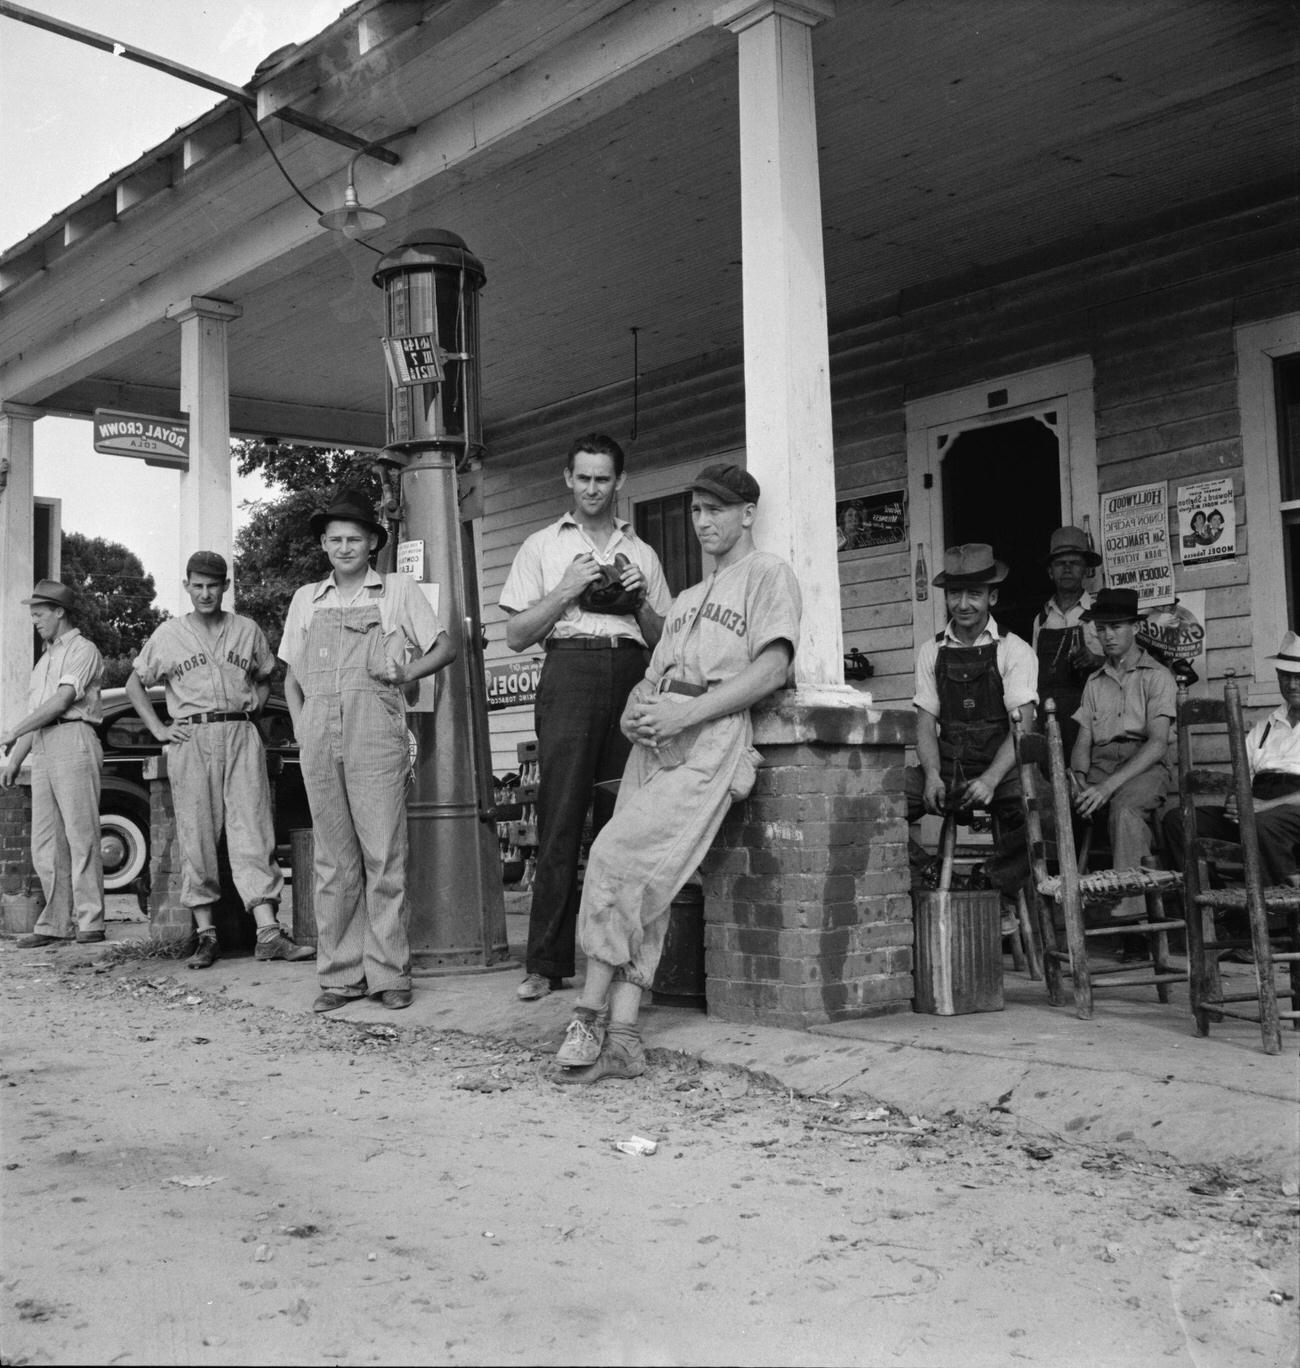 Fourth of July Community Gathering at a North Carolina Gas Station